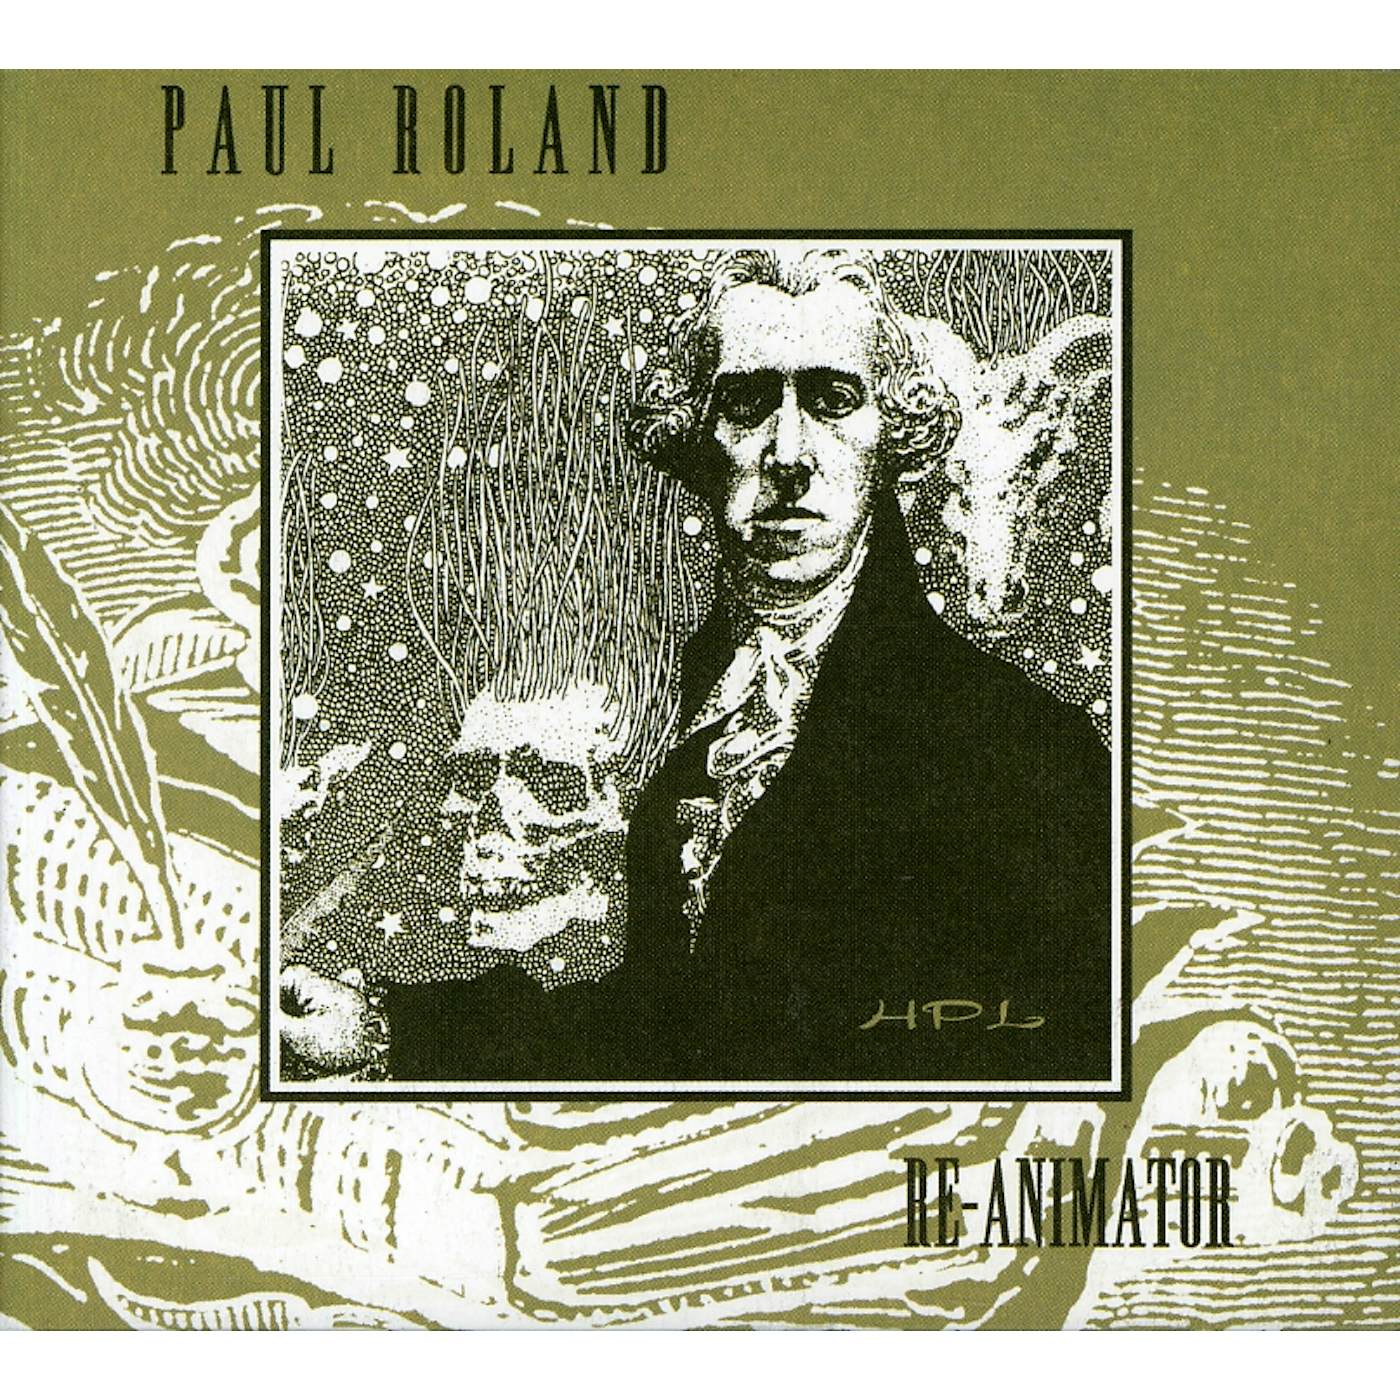 Paul Roland RE ANIMATOR CD